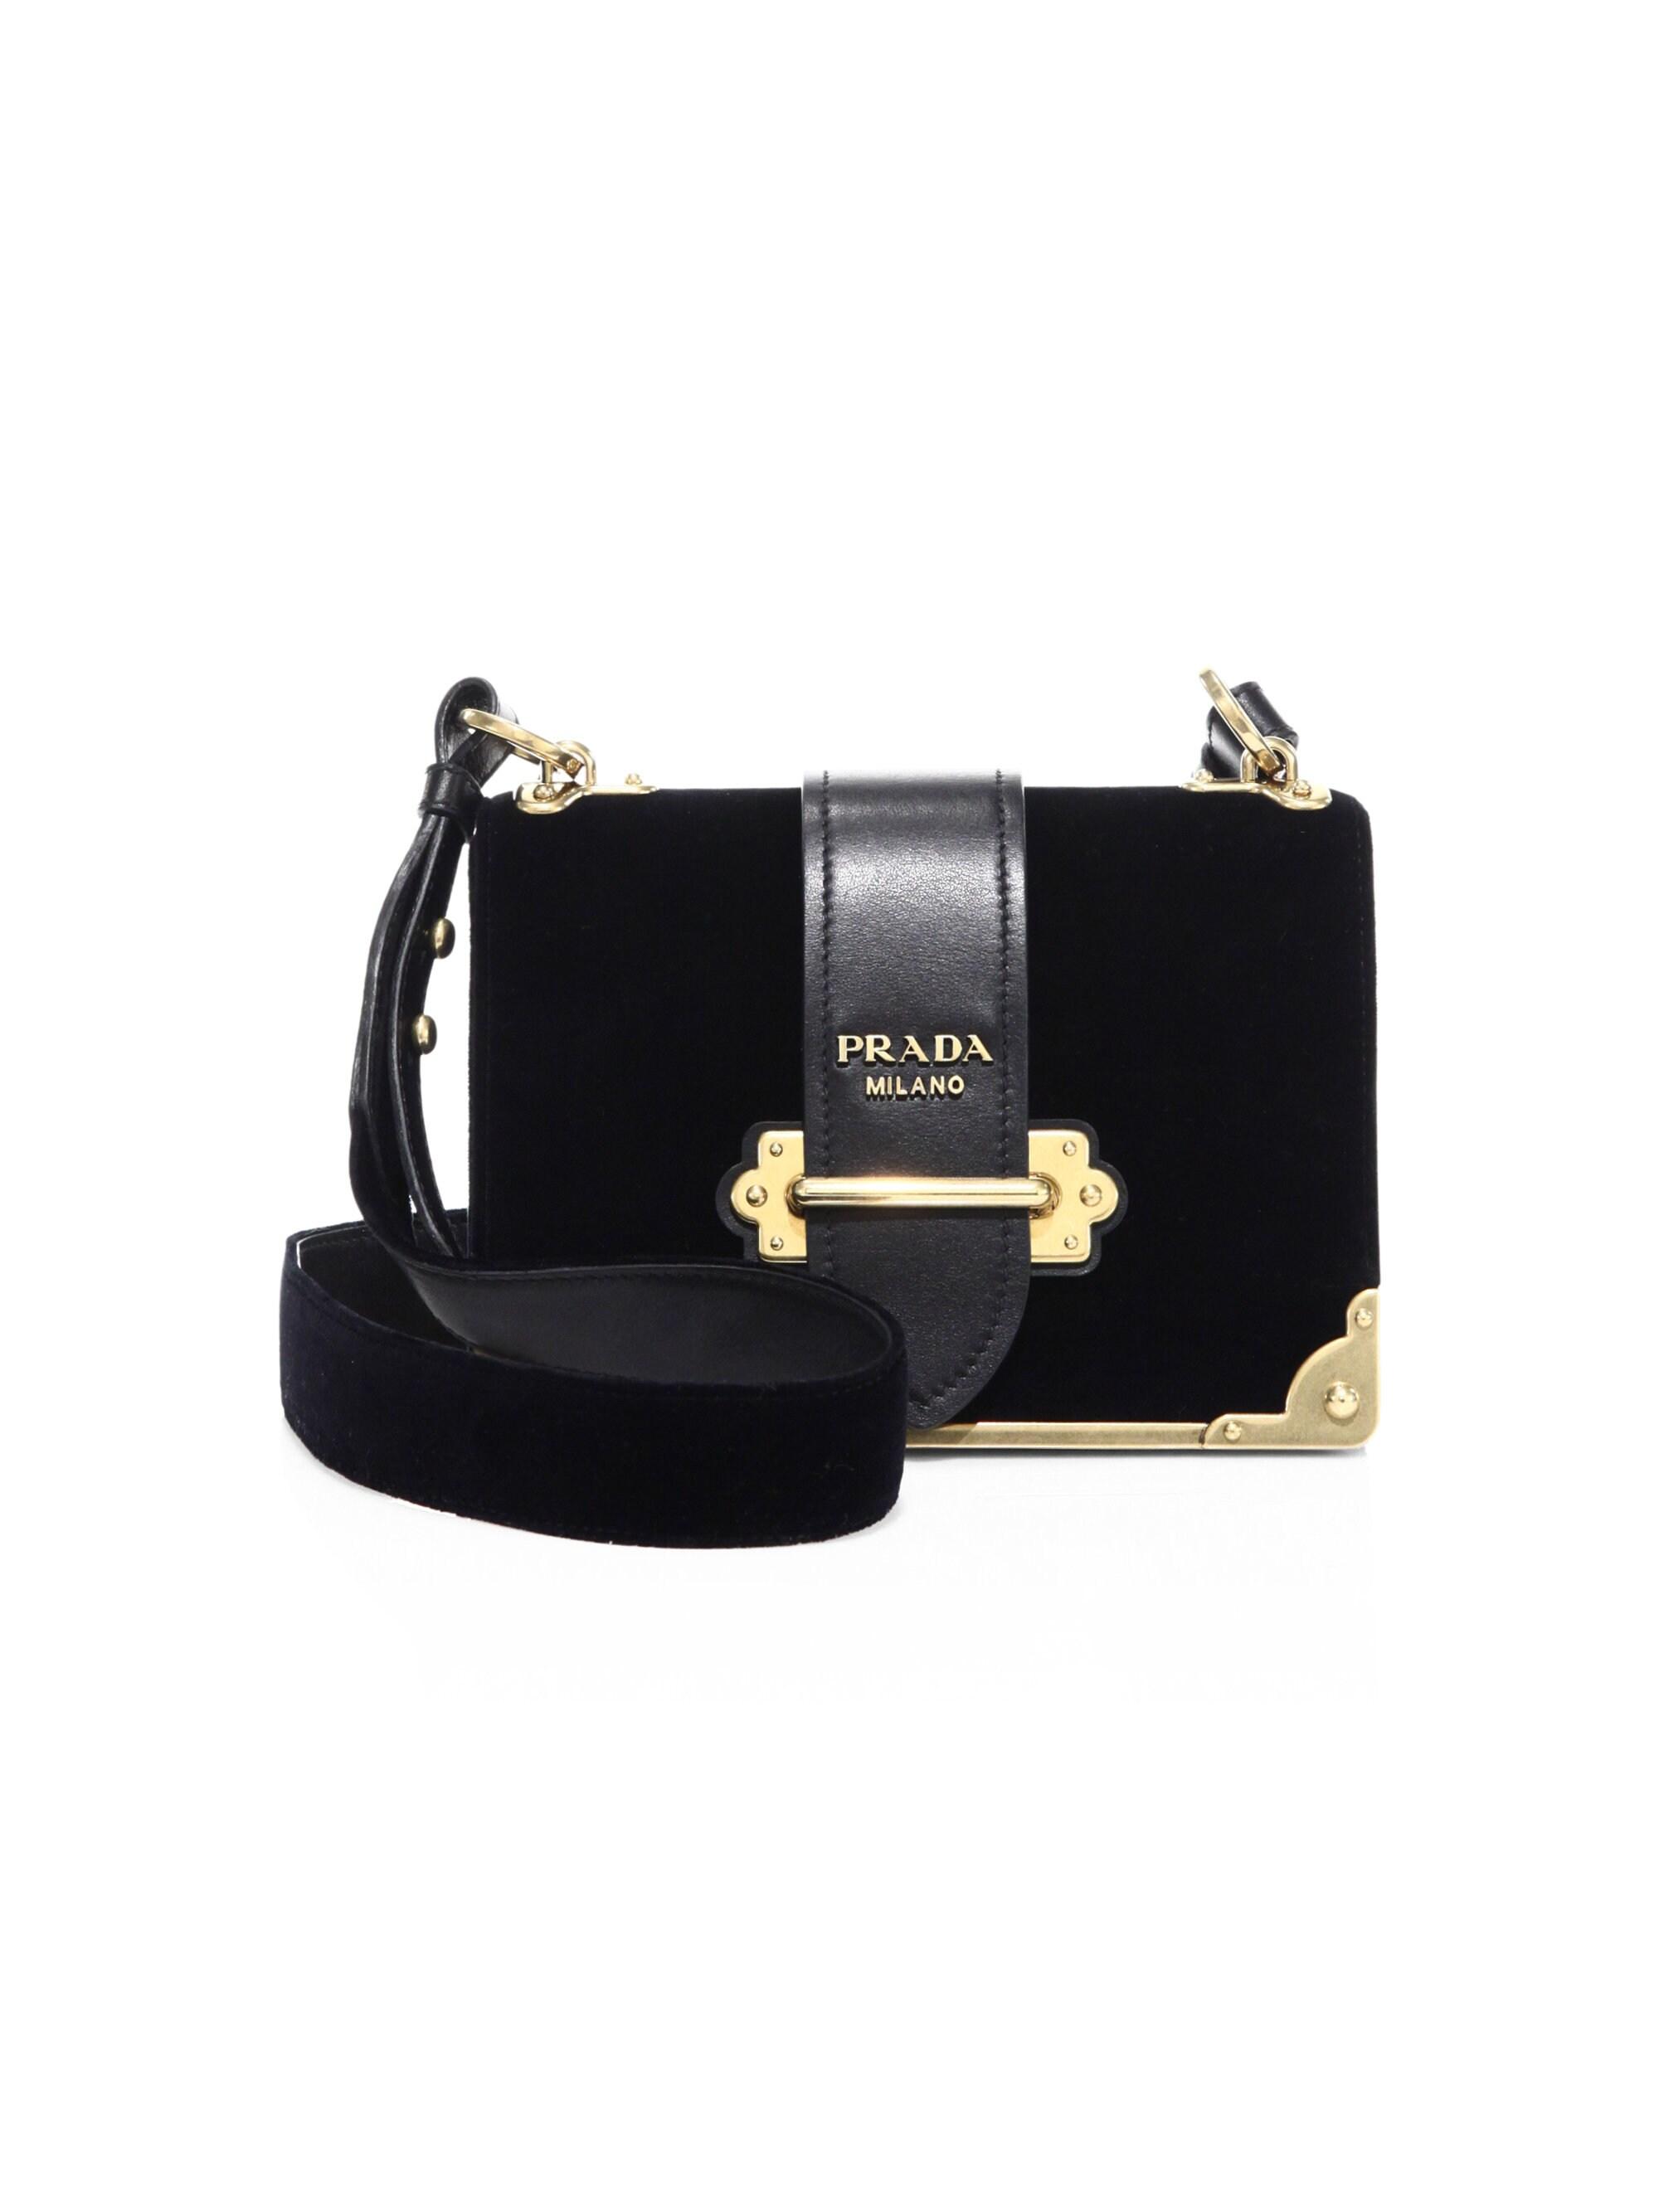 Prada Cahier Velvet & Leather Shoulder Bag in Nero (Black) | Lyst